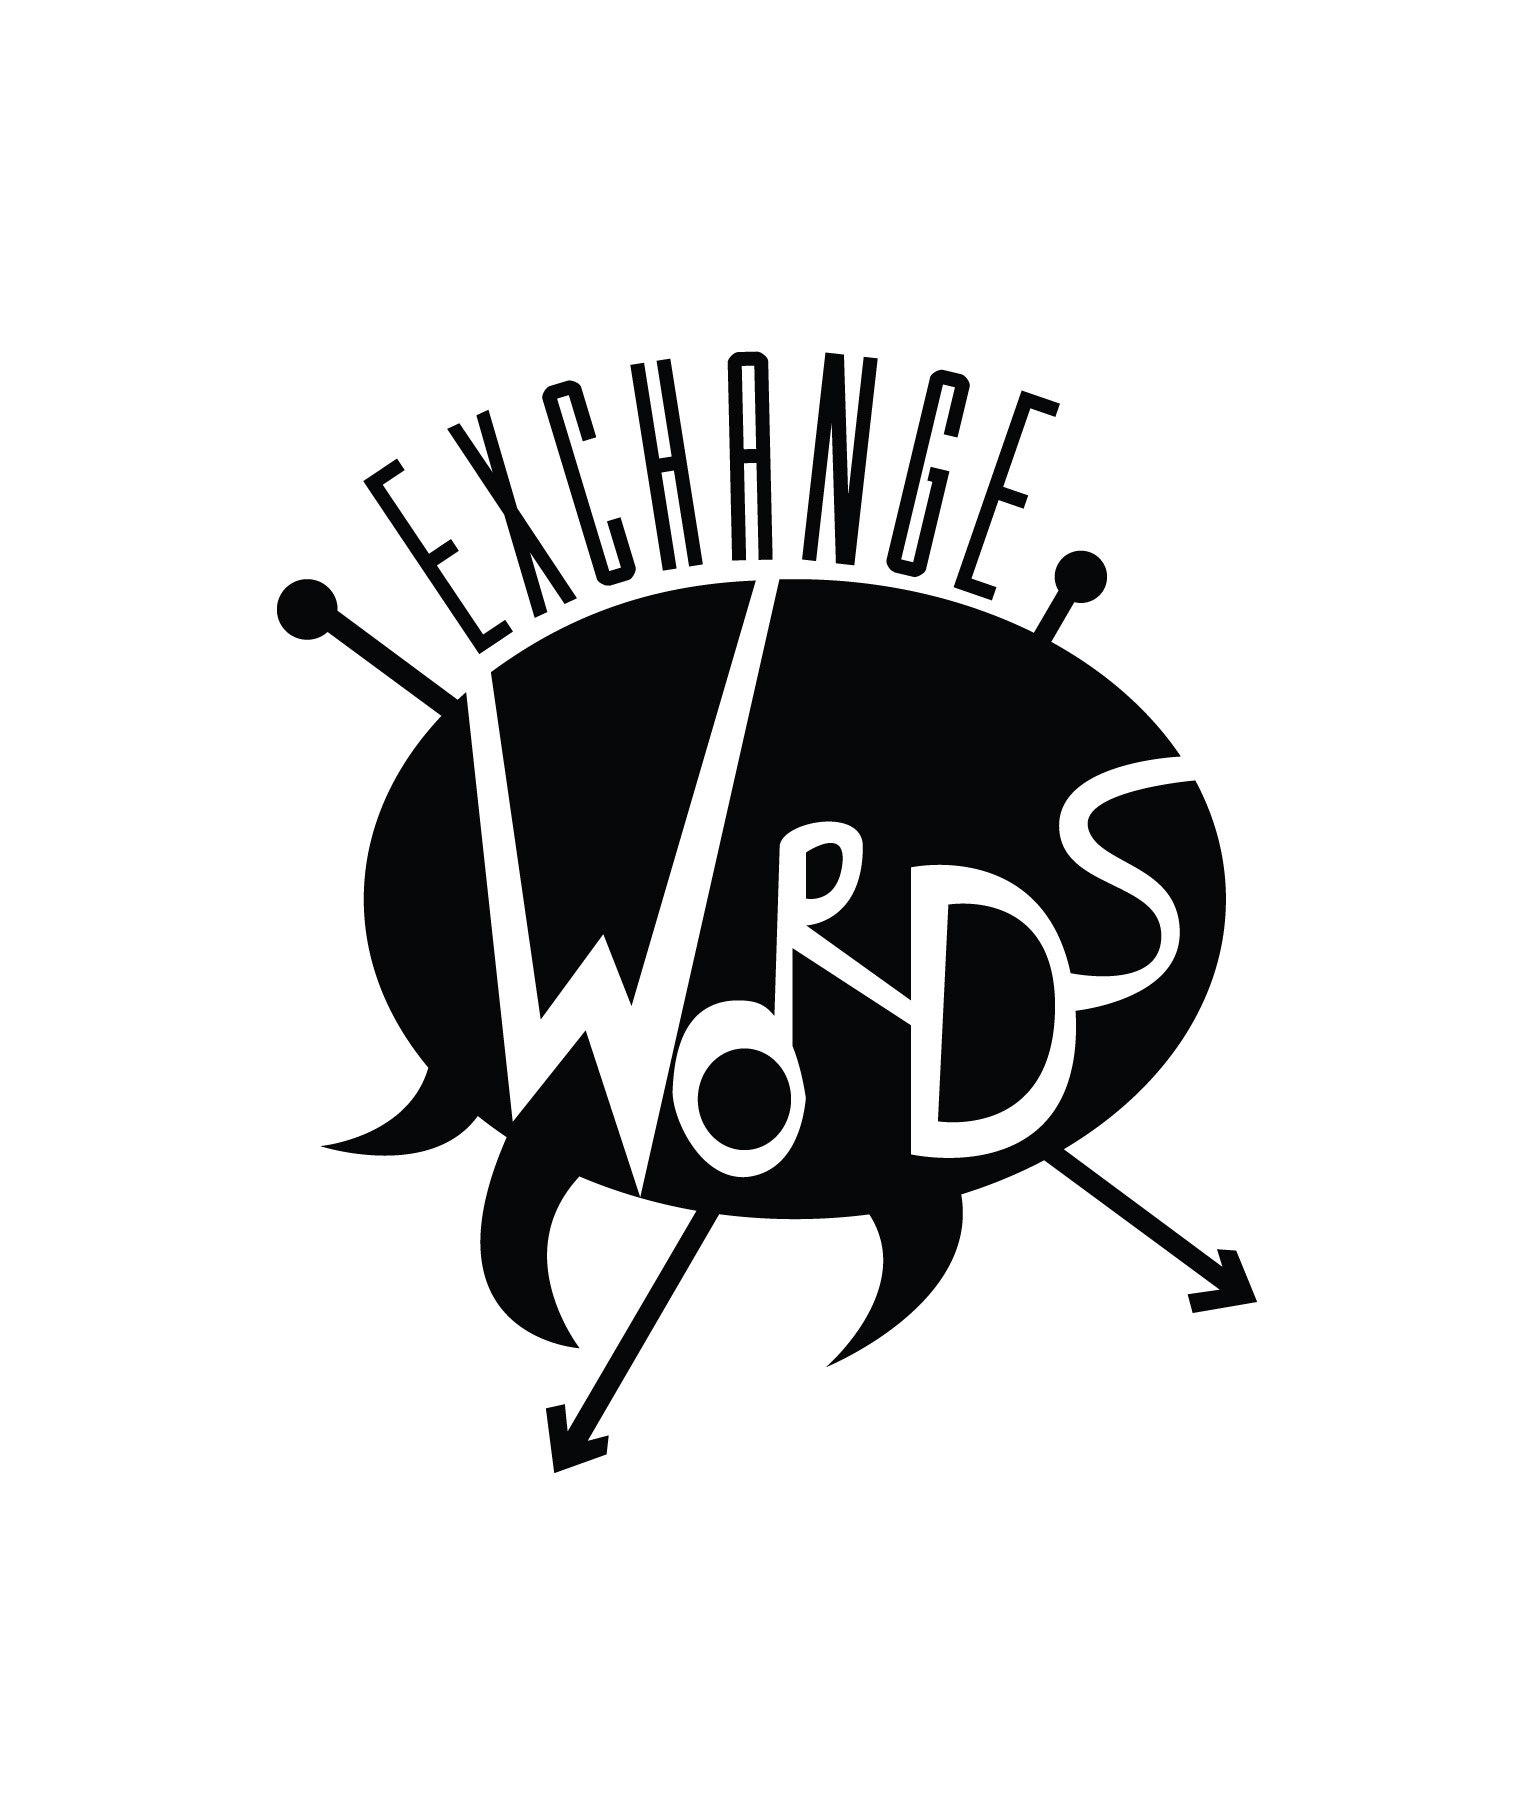 Exchange Words logo, black on white